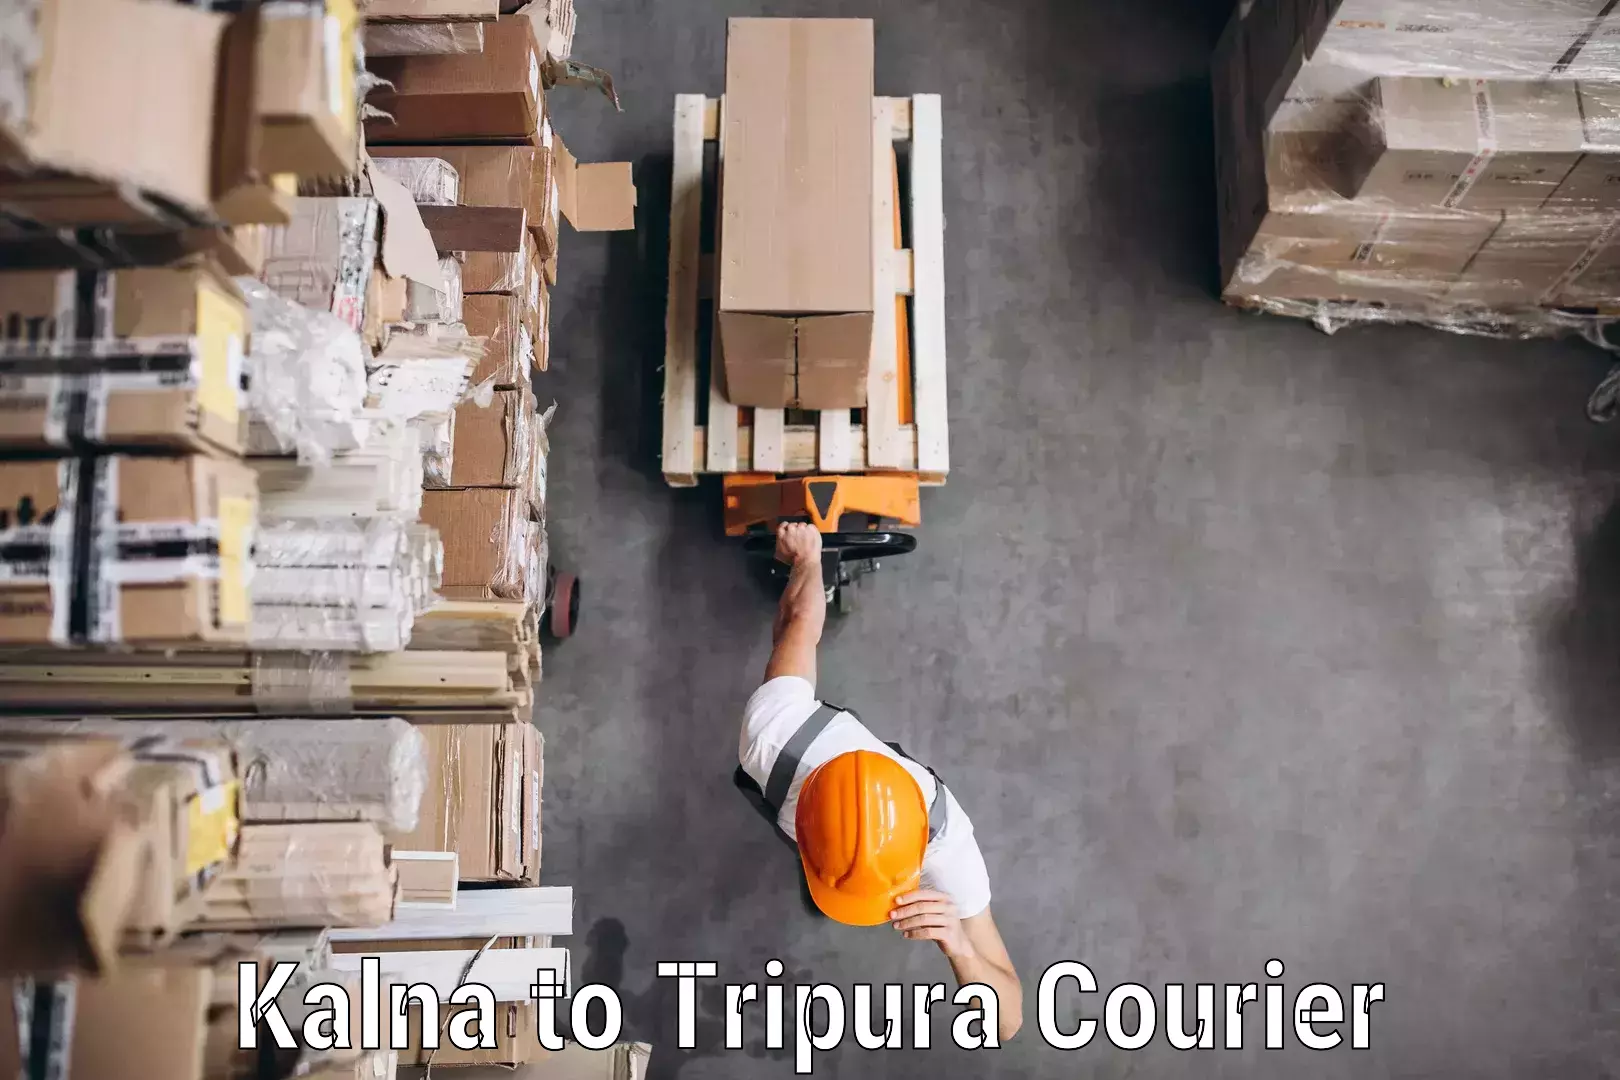 Courier service comparison Kalna to Tripura